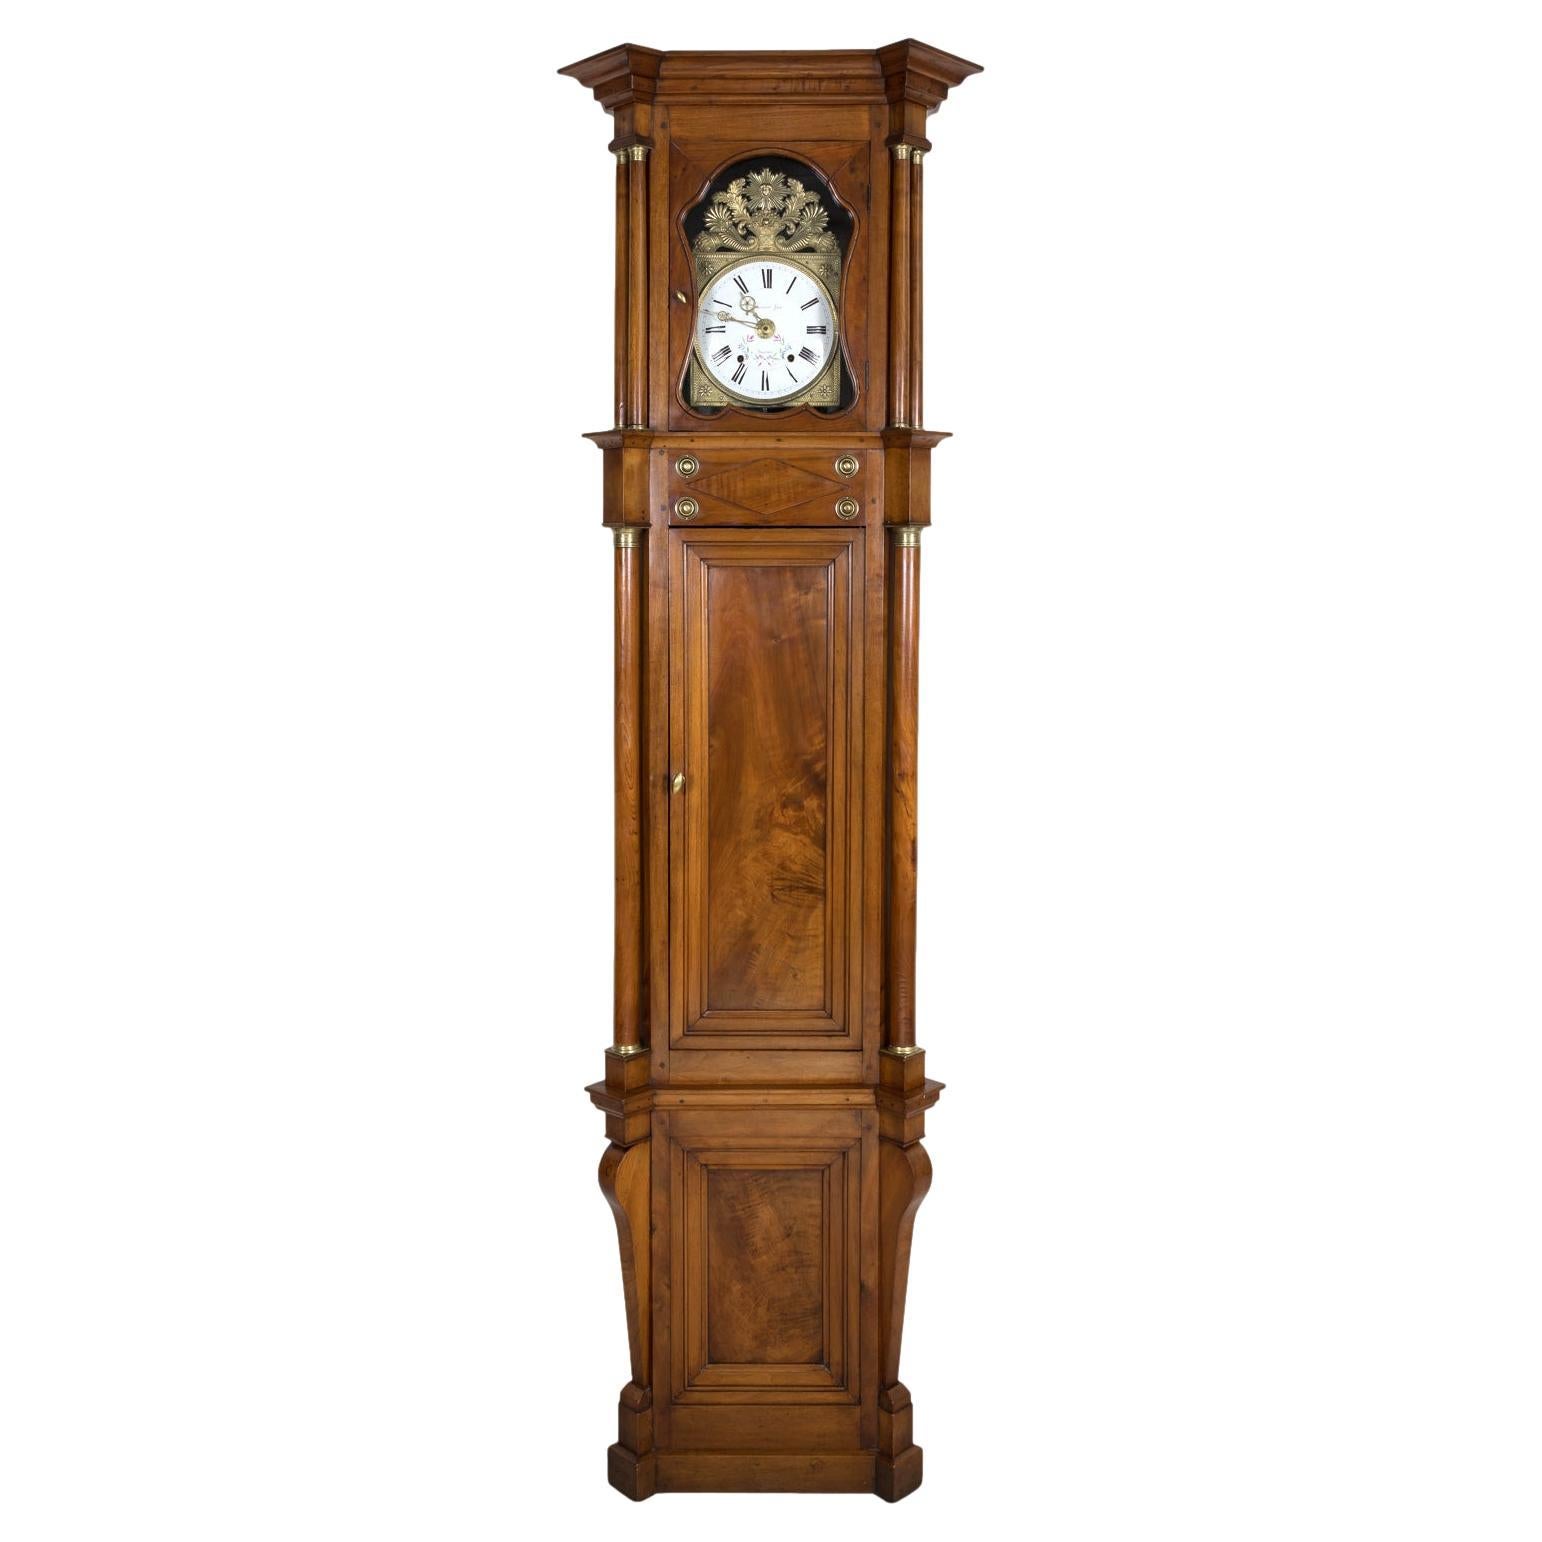 19th Century French Empire Period Walnut Eight-Day Comtoise Longcase Clock